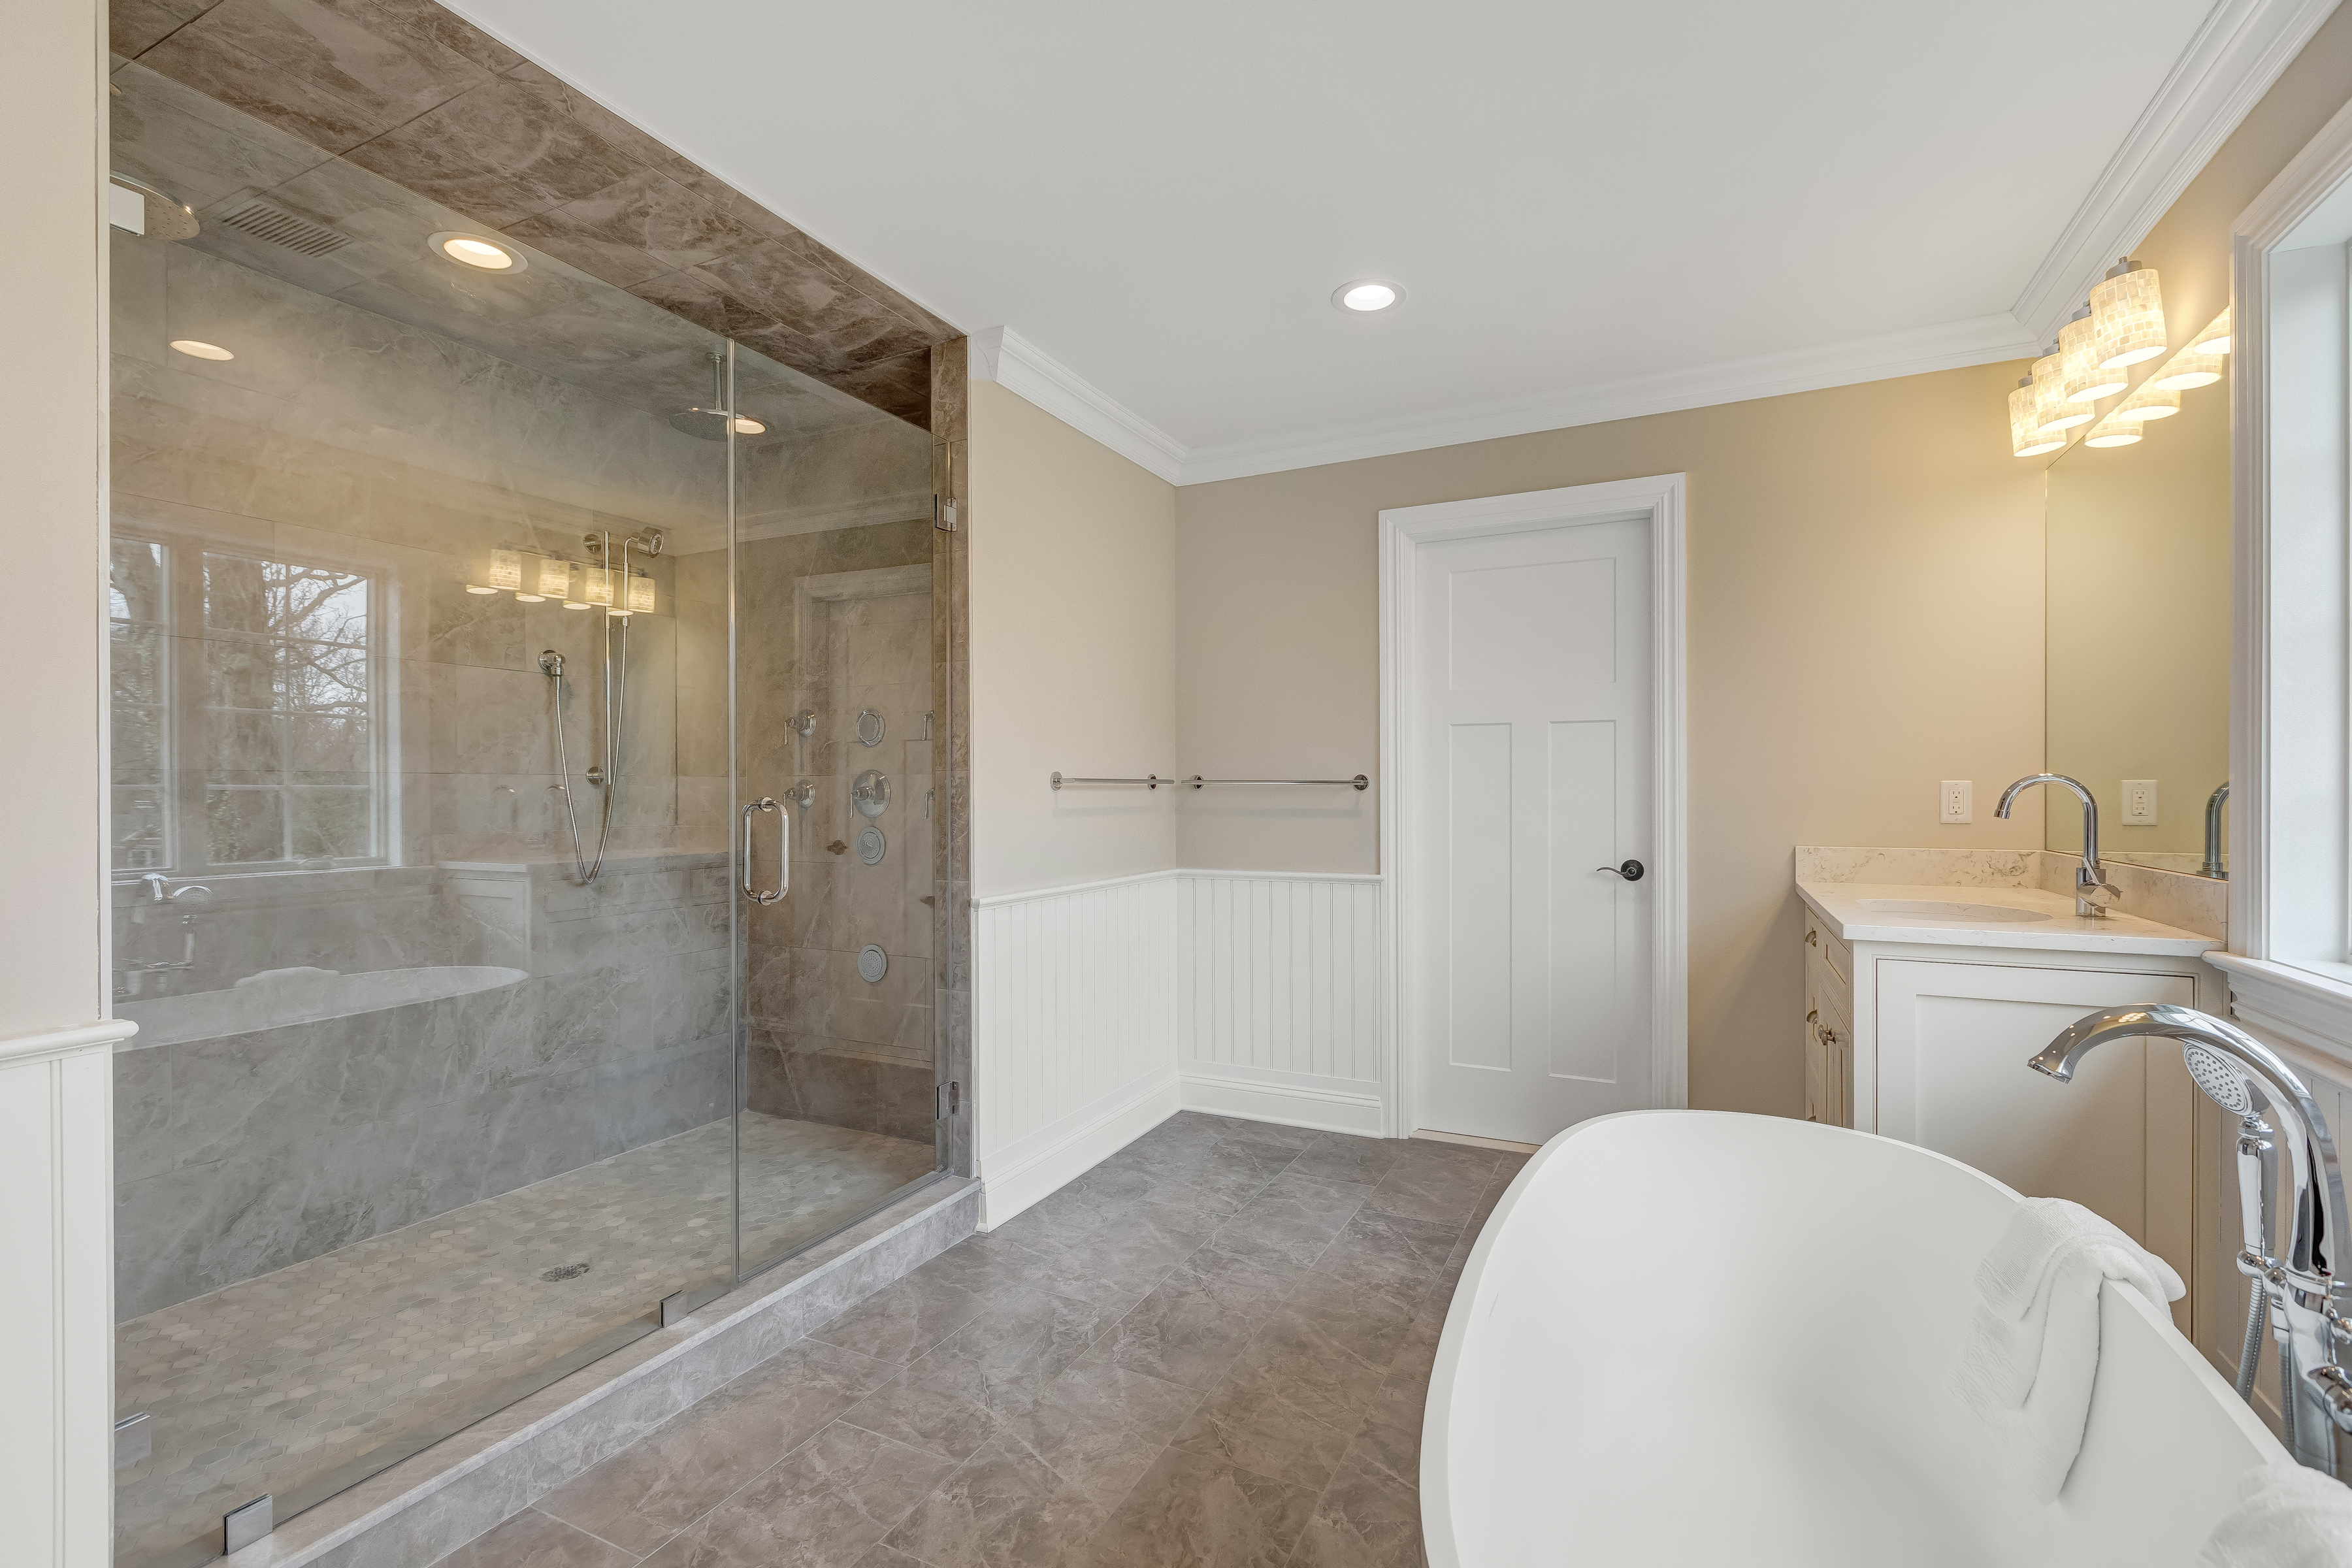 19 – 93 Slope Drive – Spa-like Master Bath